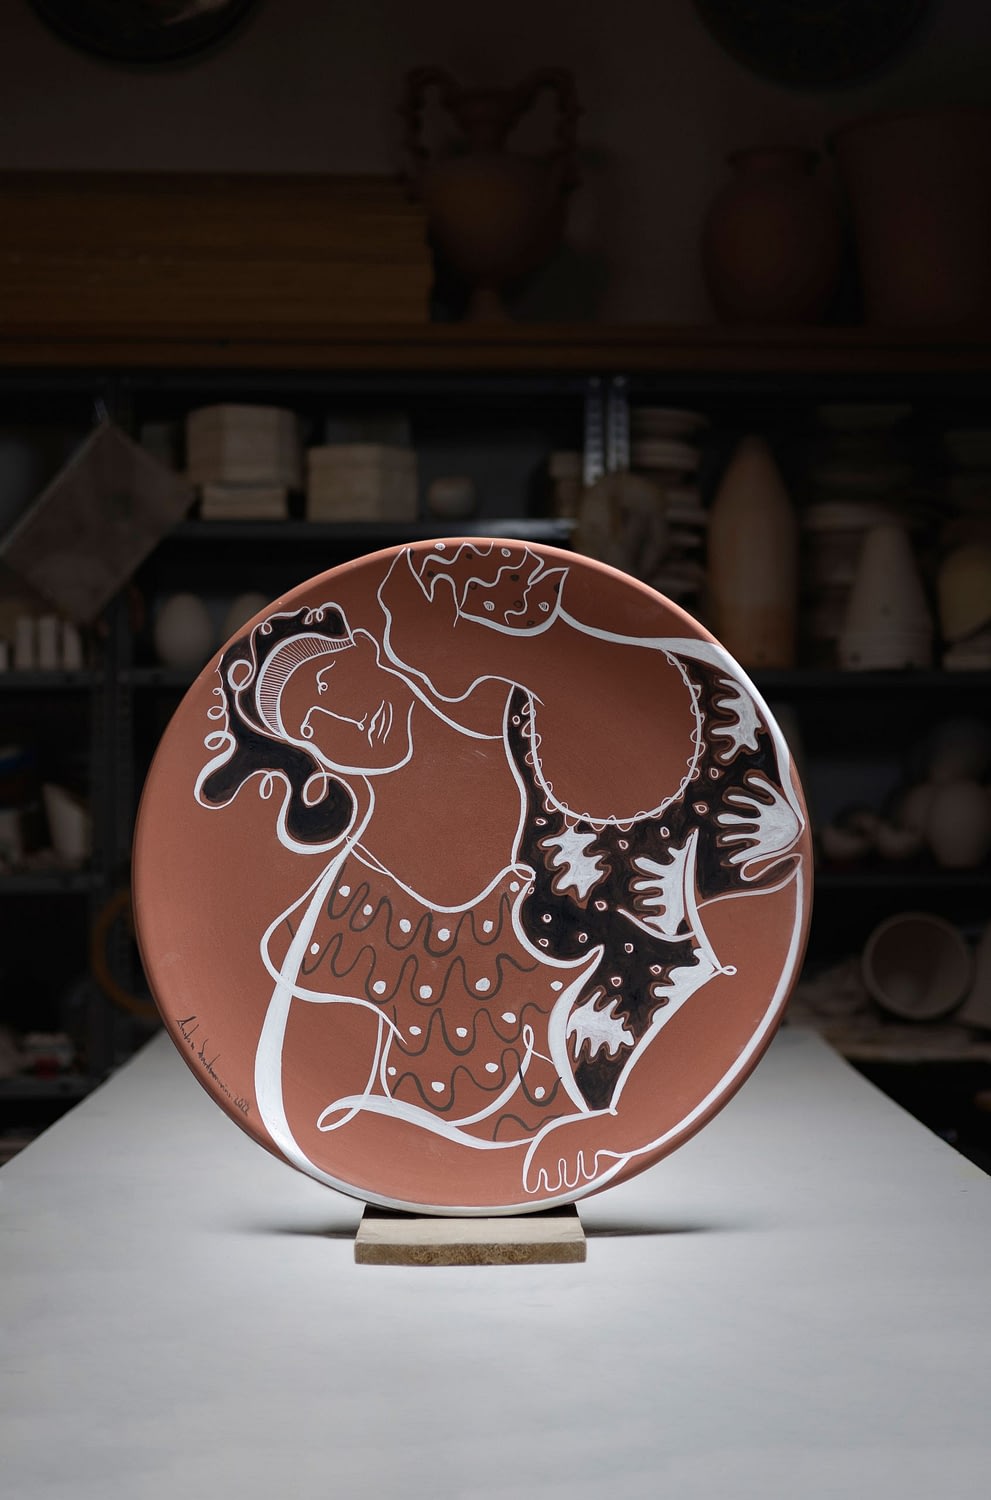 Andrea Santamarina Rossana Orlandi Mint Ceramics Hand painted ceramic Cerámica de san ginés Talavera de la Reina Lucas Amillano